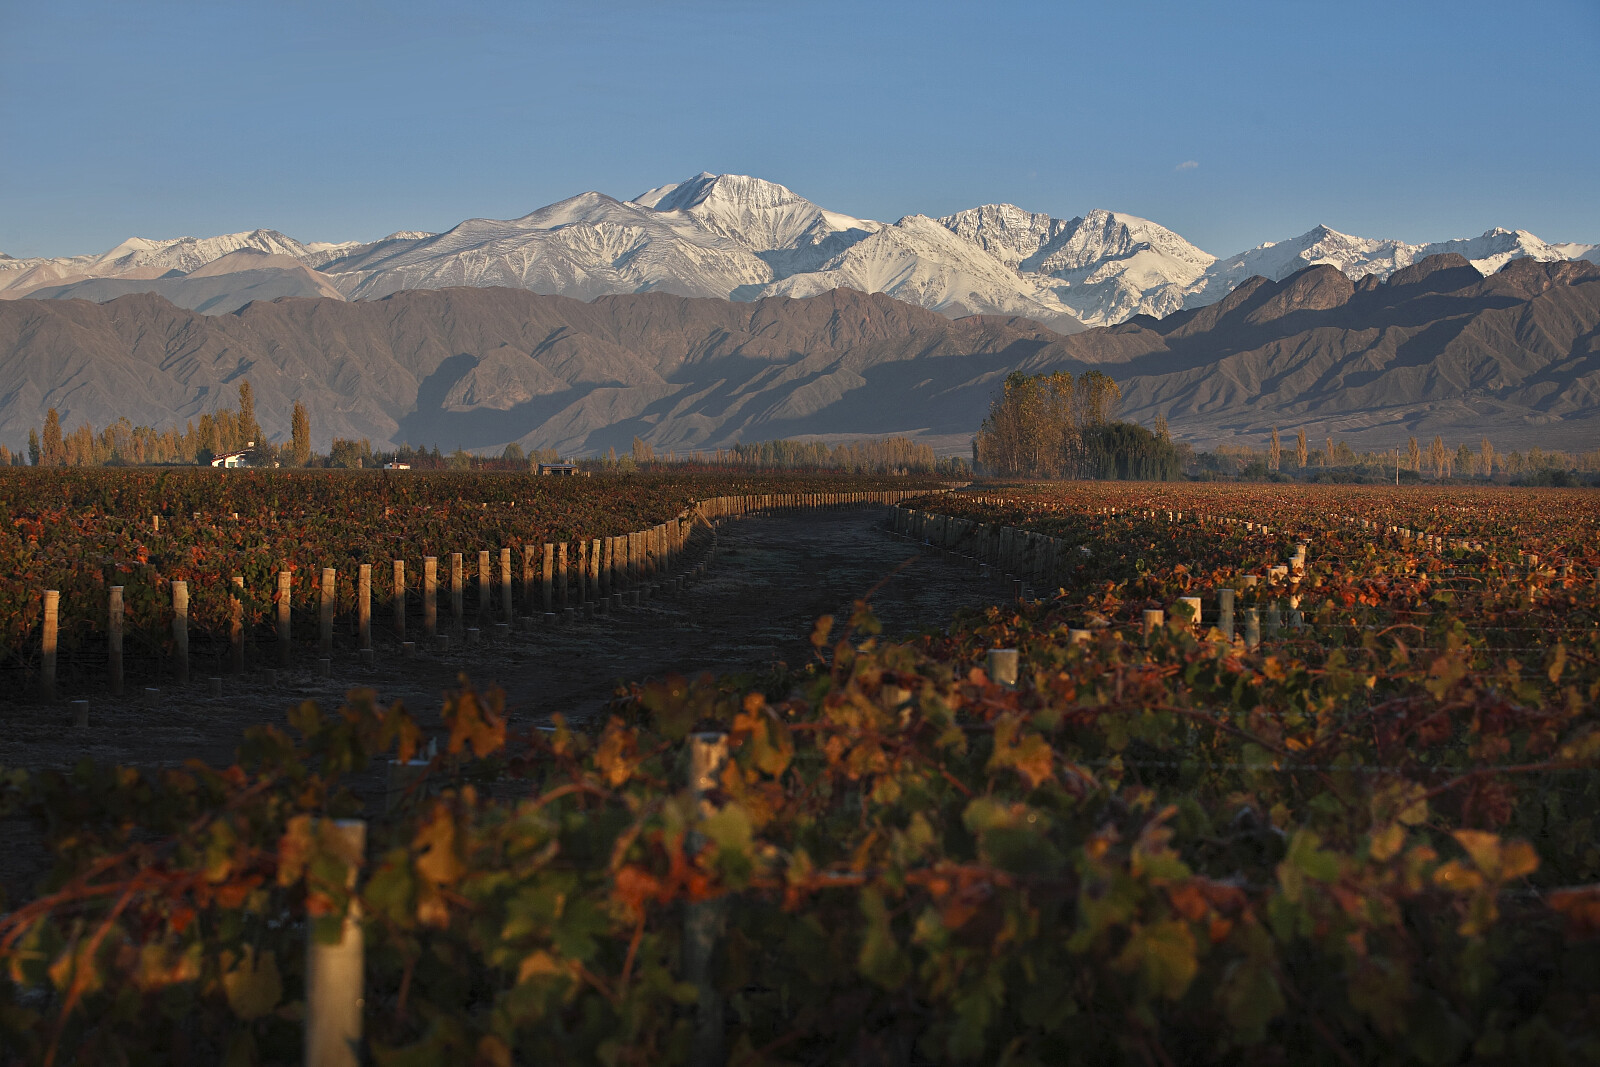 Mendoza-vineyards.JPG [2.26 MB]